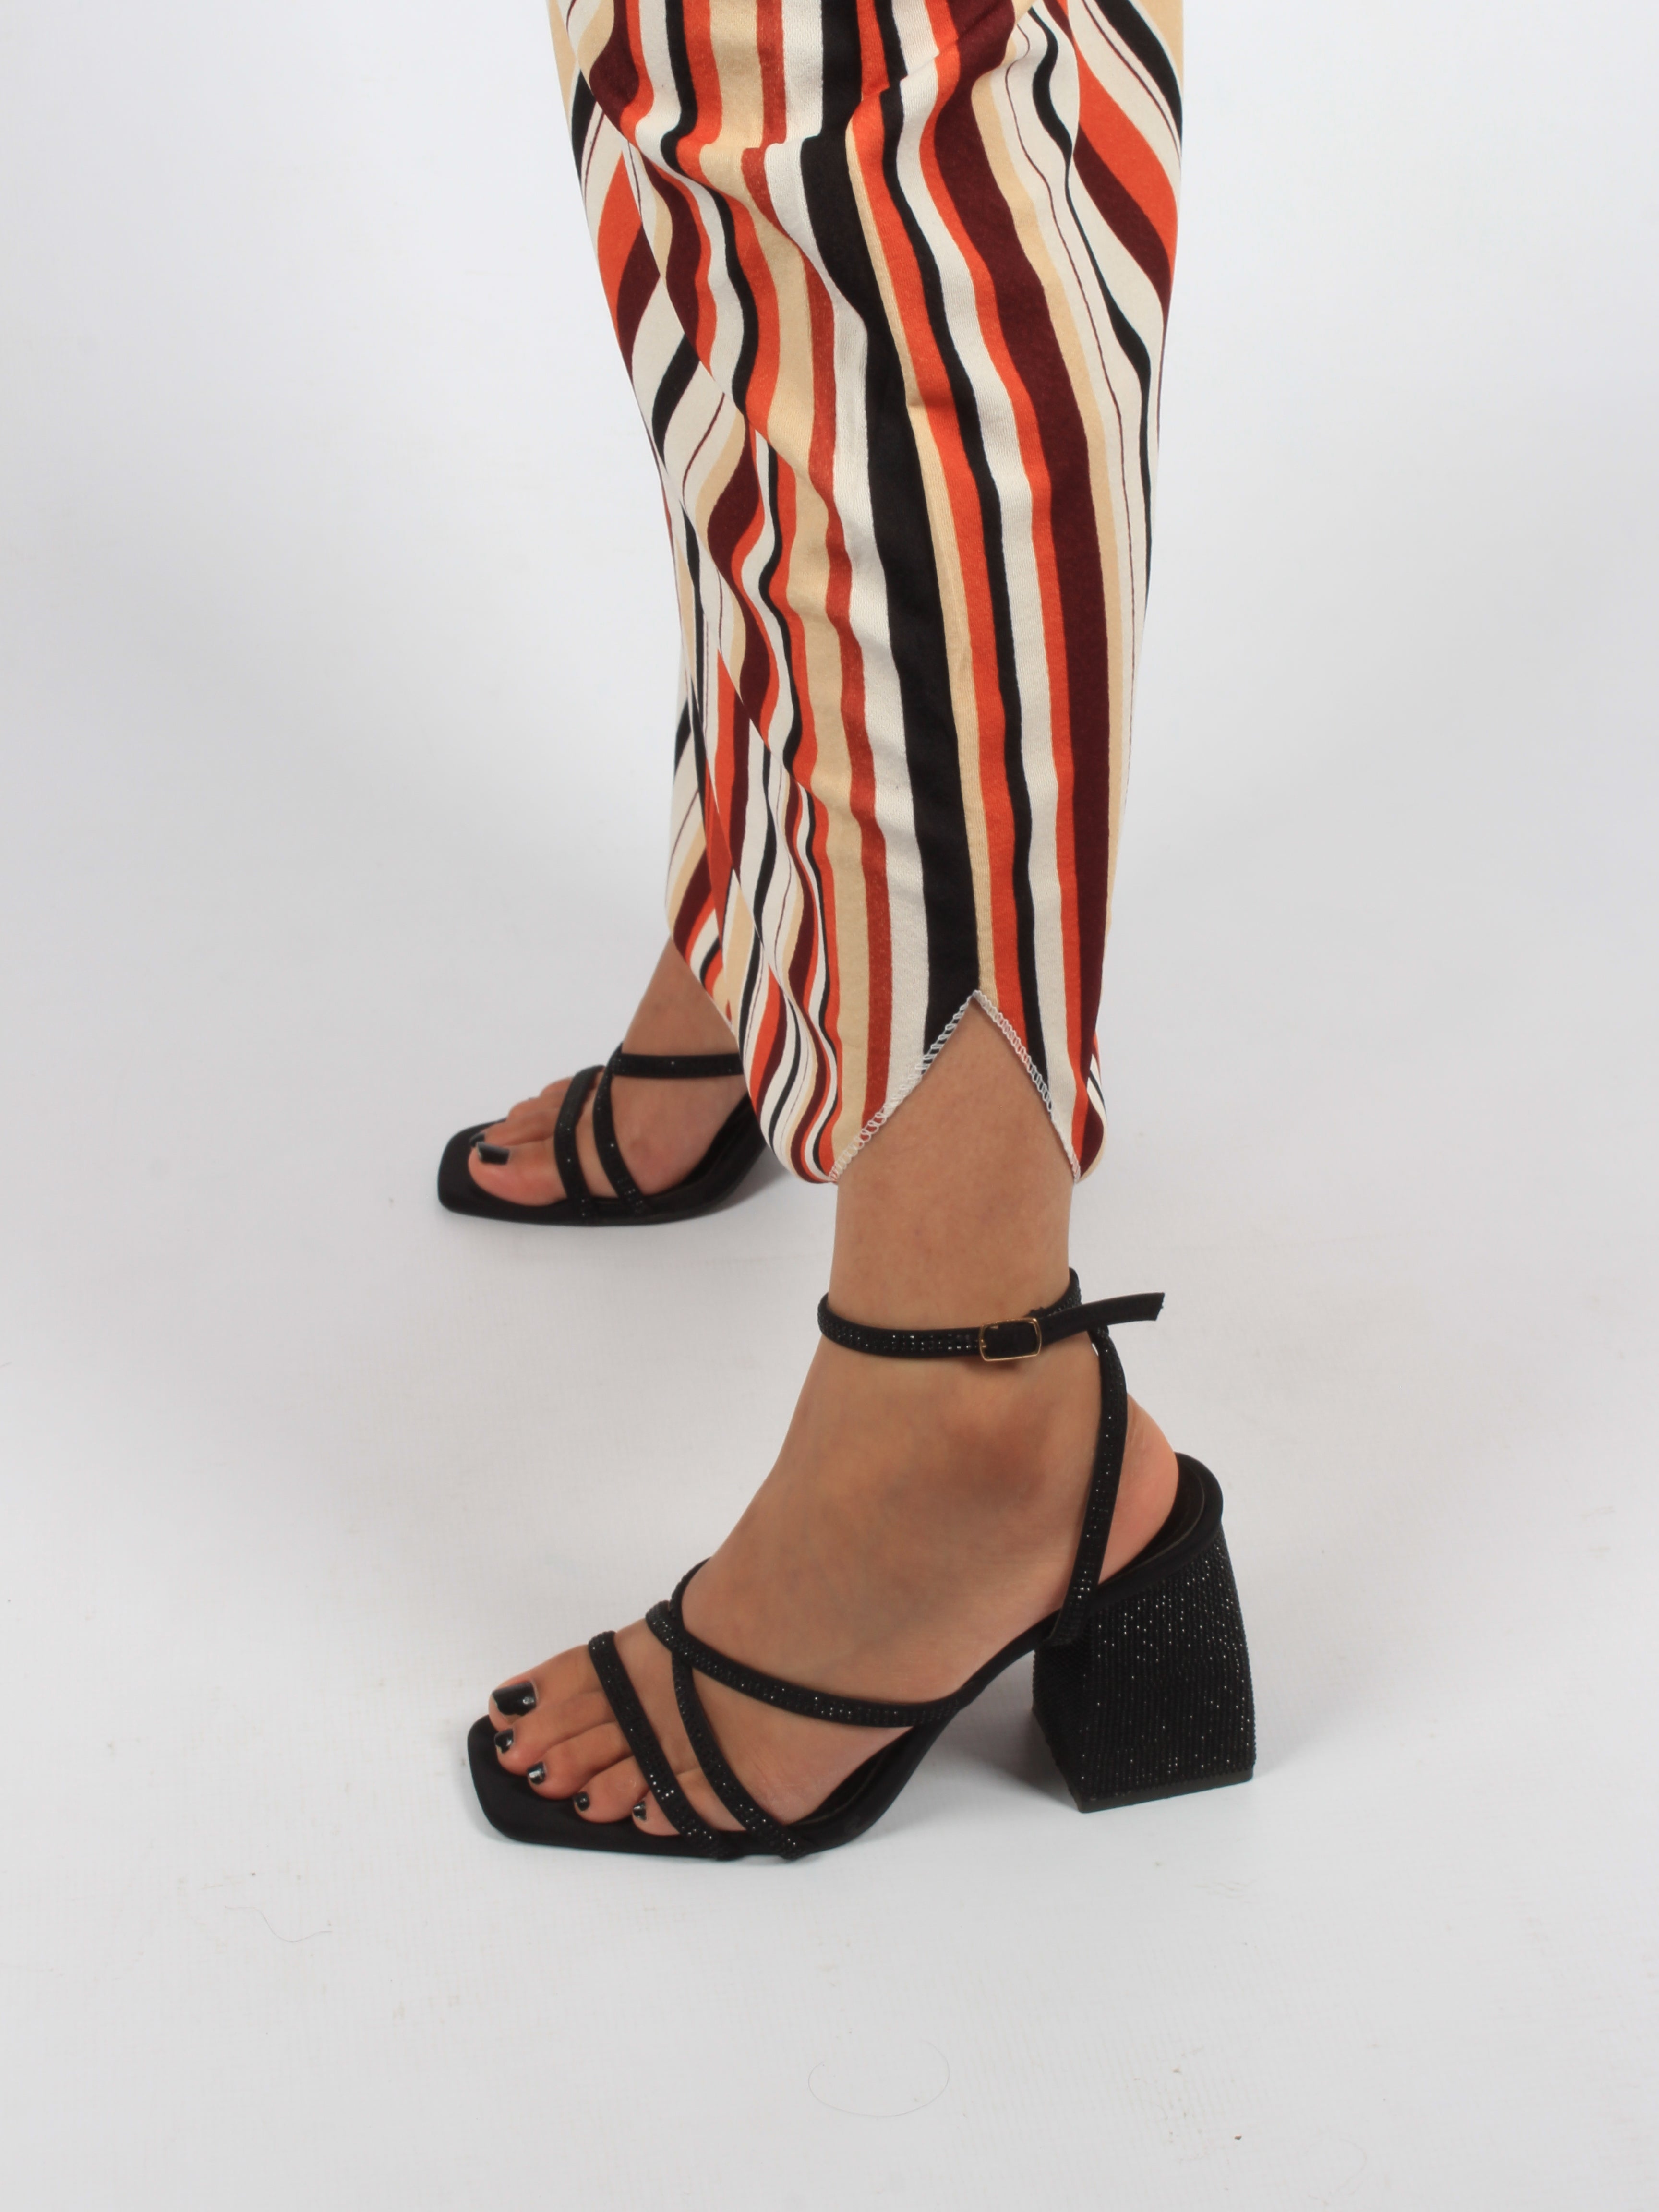 Striped Maxi Dress With Belt